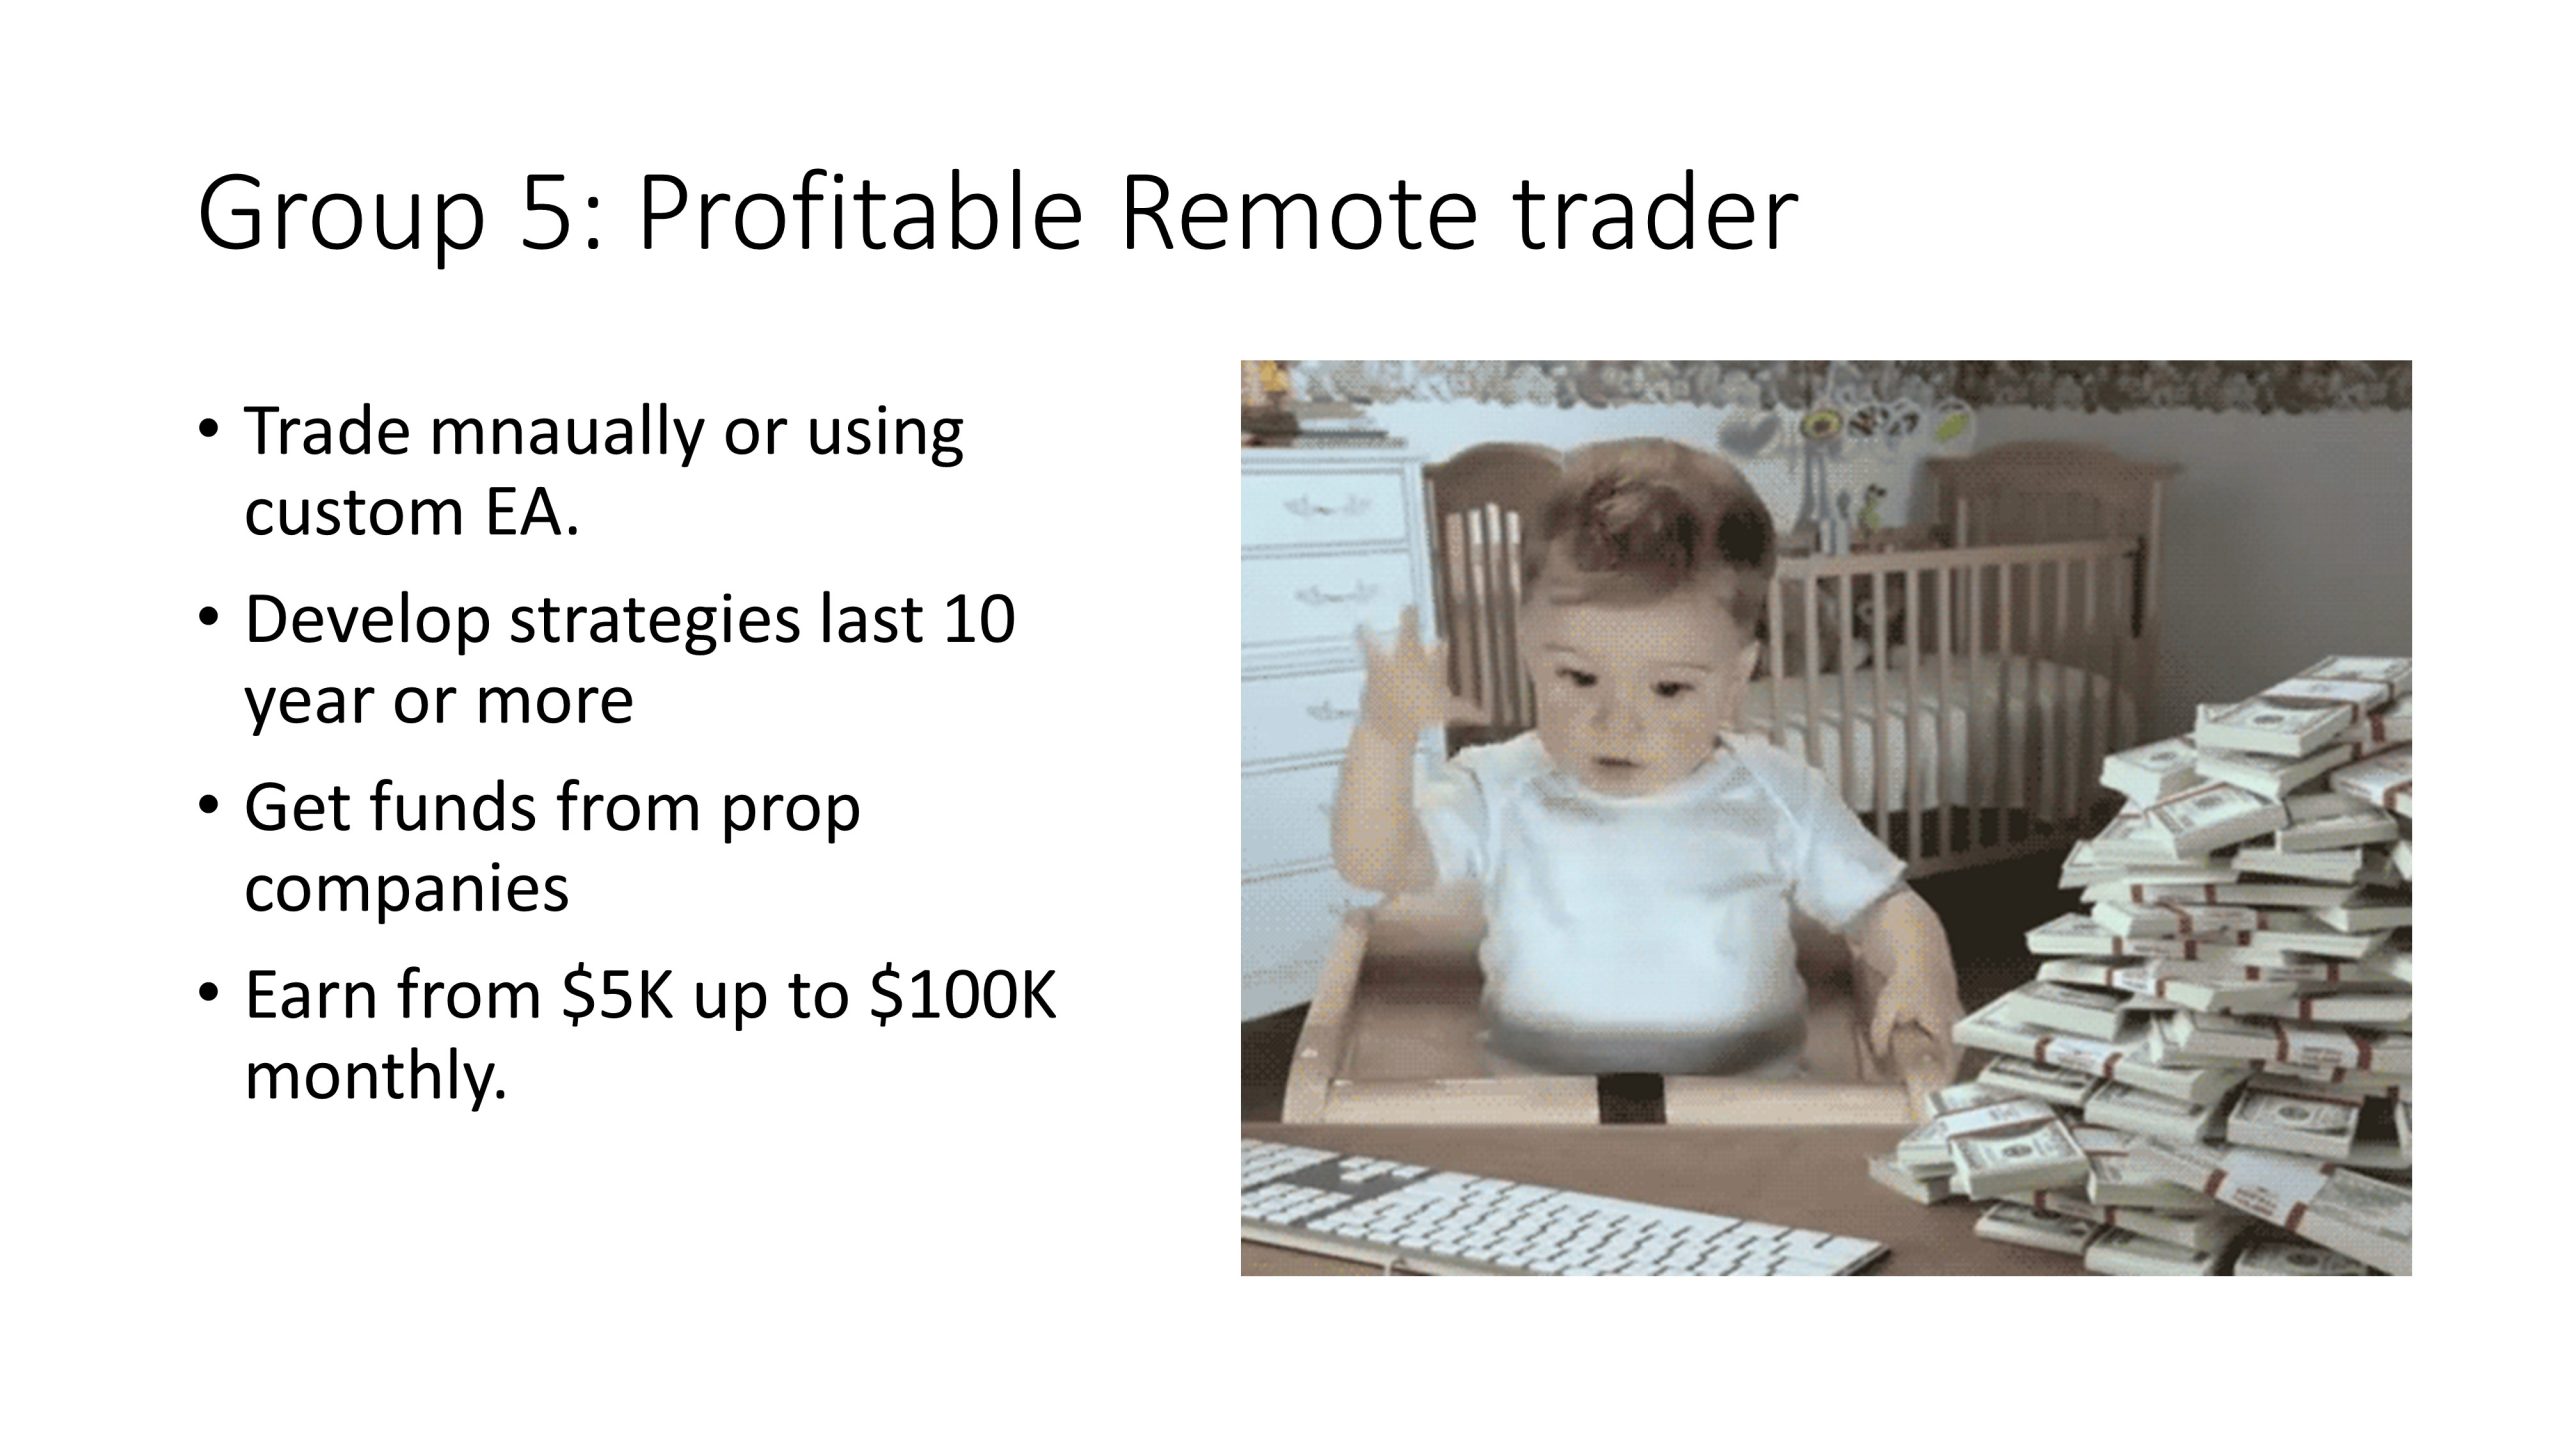 Profitable Remote trader